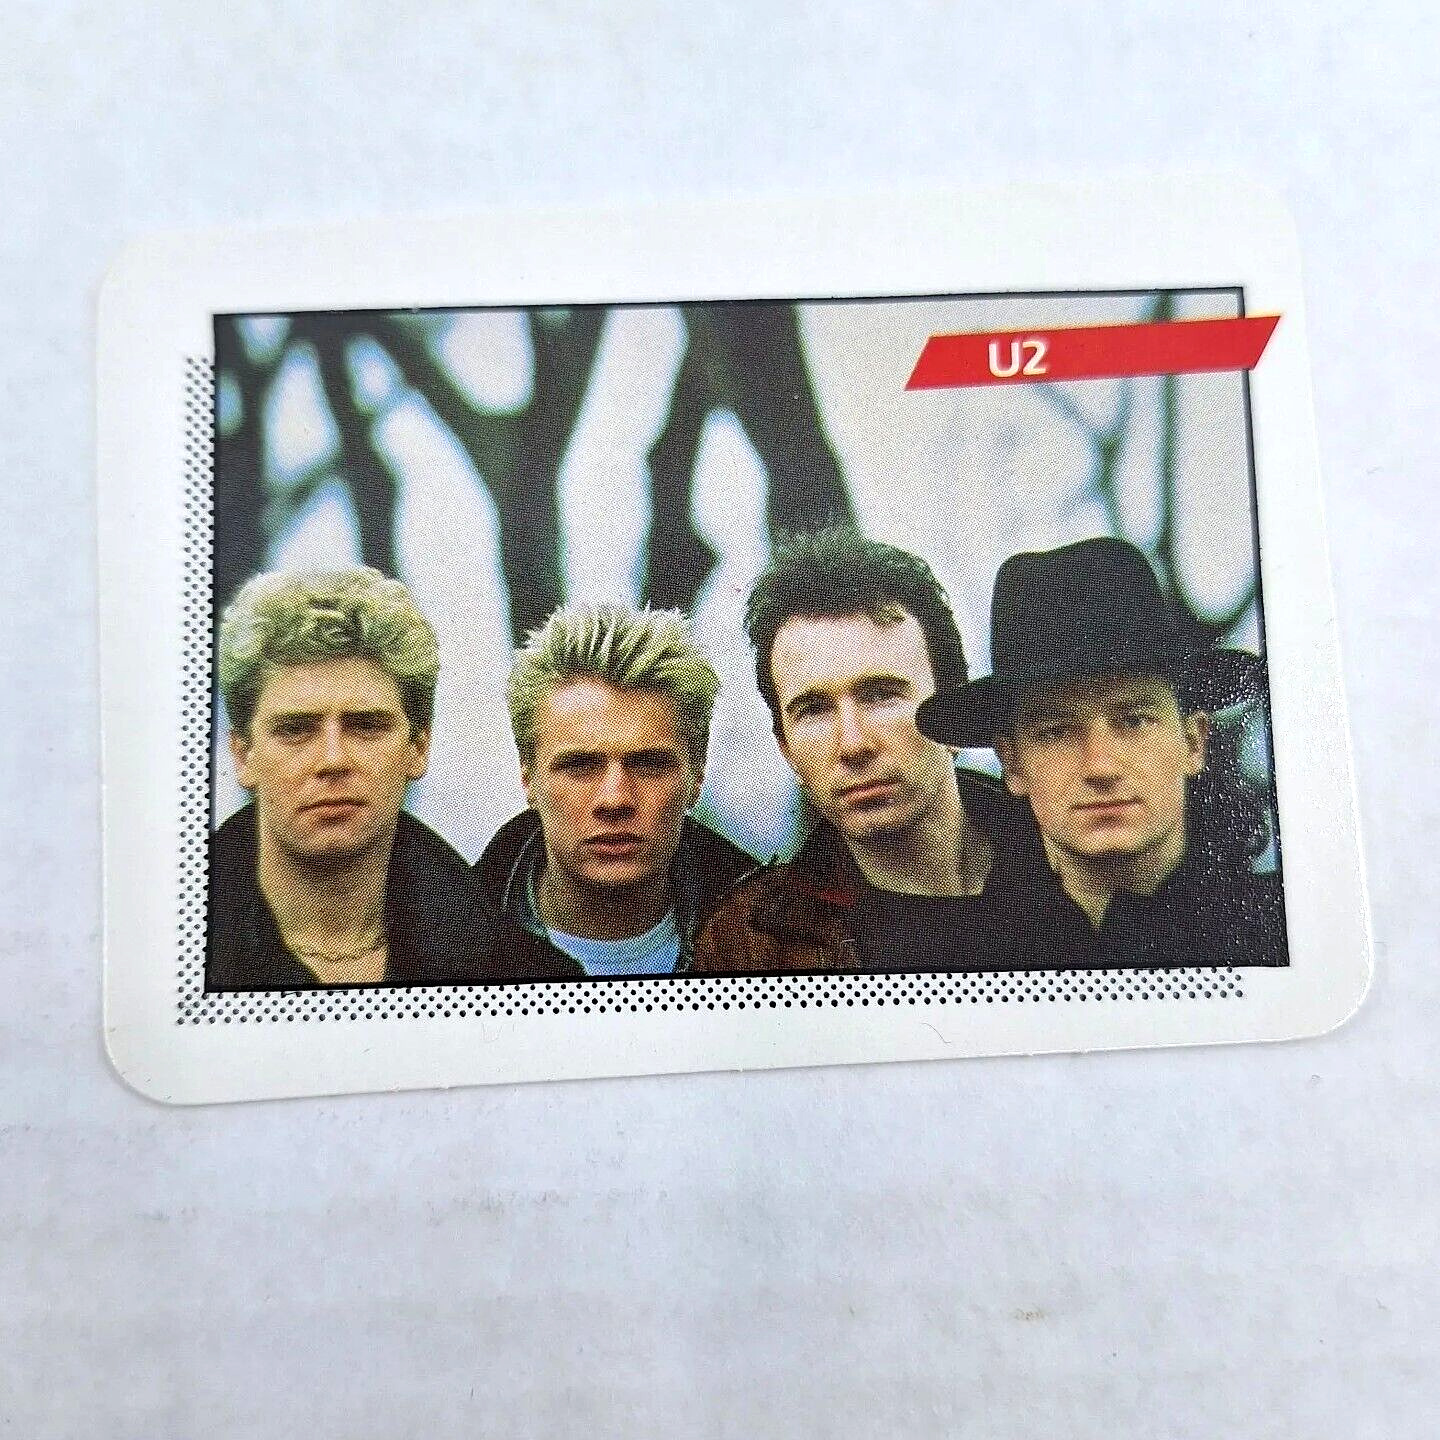 U2 Rookie Card 1985 AGI Rock Star Concert Cards Series 1 Vintage